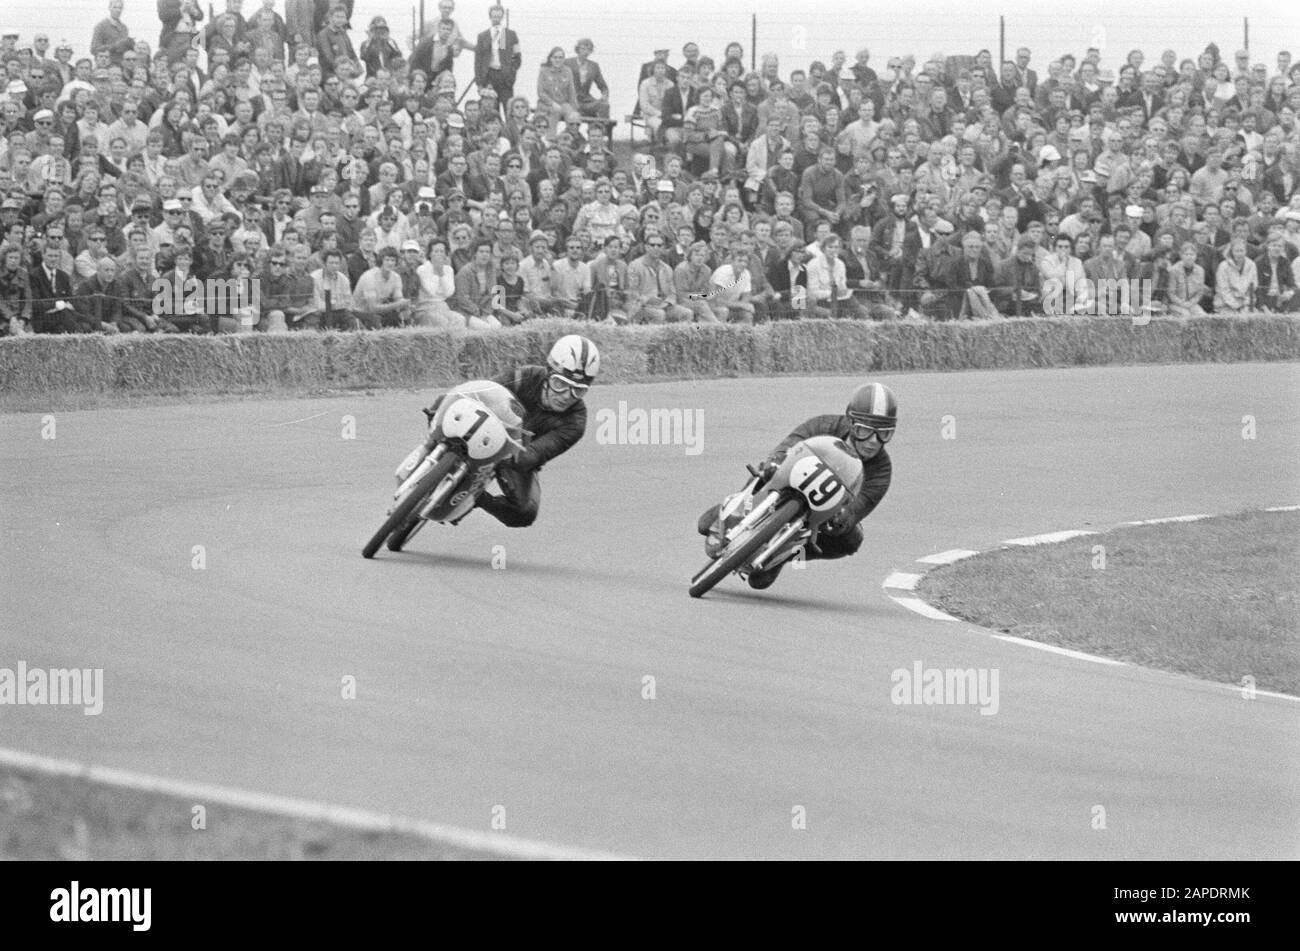 TT Assen 1971 Description: Angel Nieto (l) en Jan de Vries (r) on 50cc in action Date: 26 June 1971 Location: Assen Keywords: motorsport Personal name: Nieto, Angel, Vries, Jan de (motorcycle driver) Institution name: TT Stock Photo